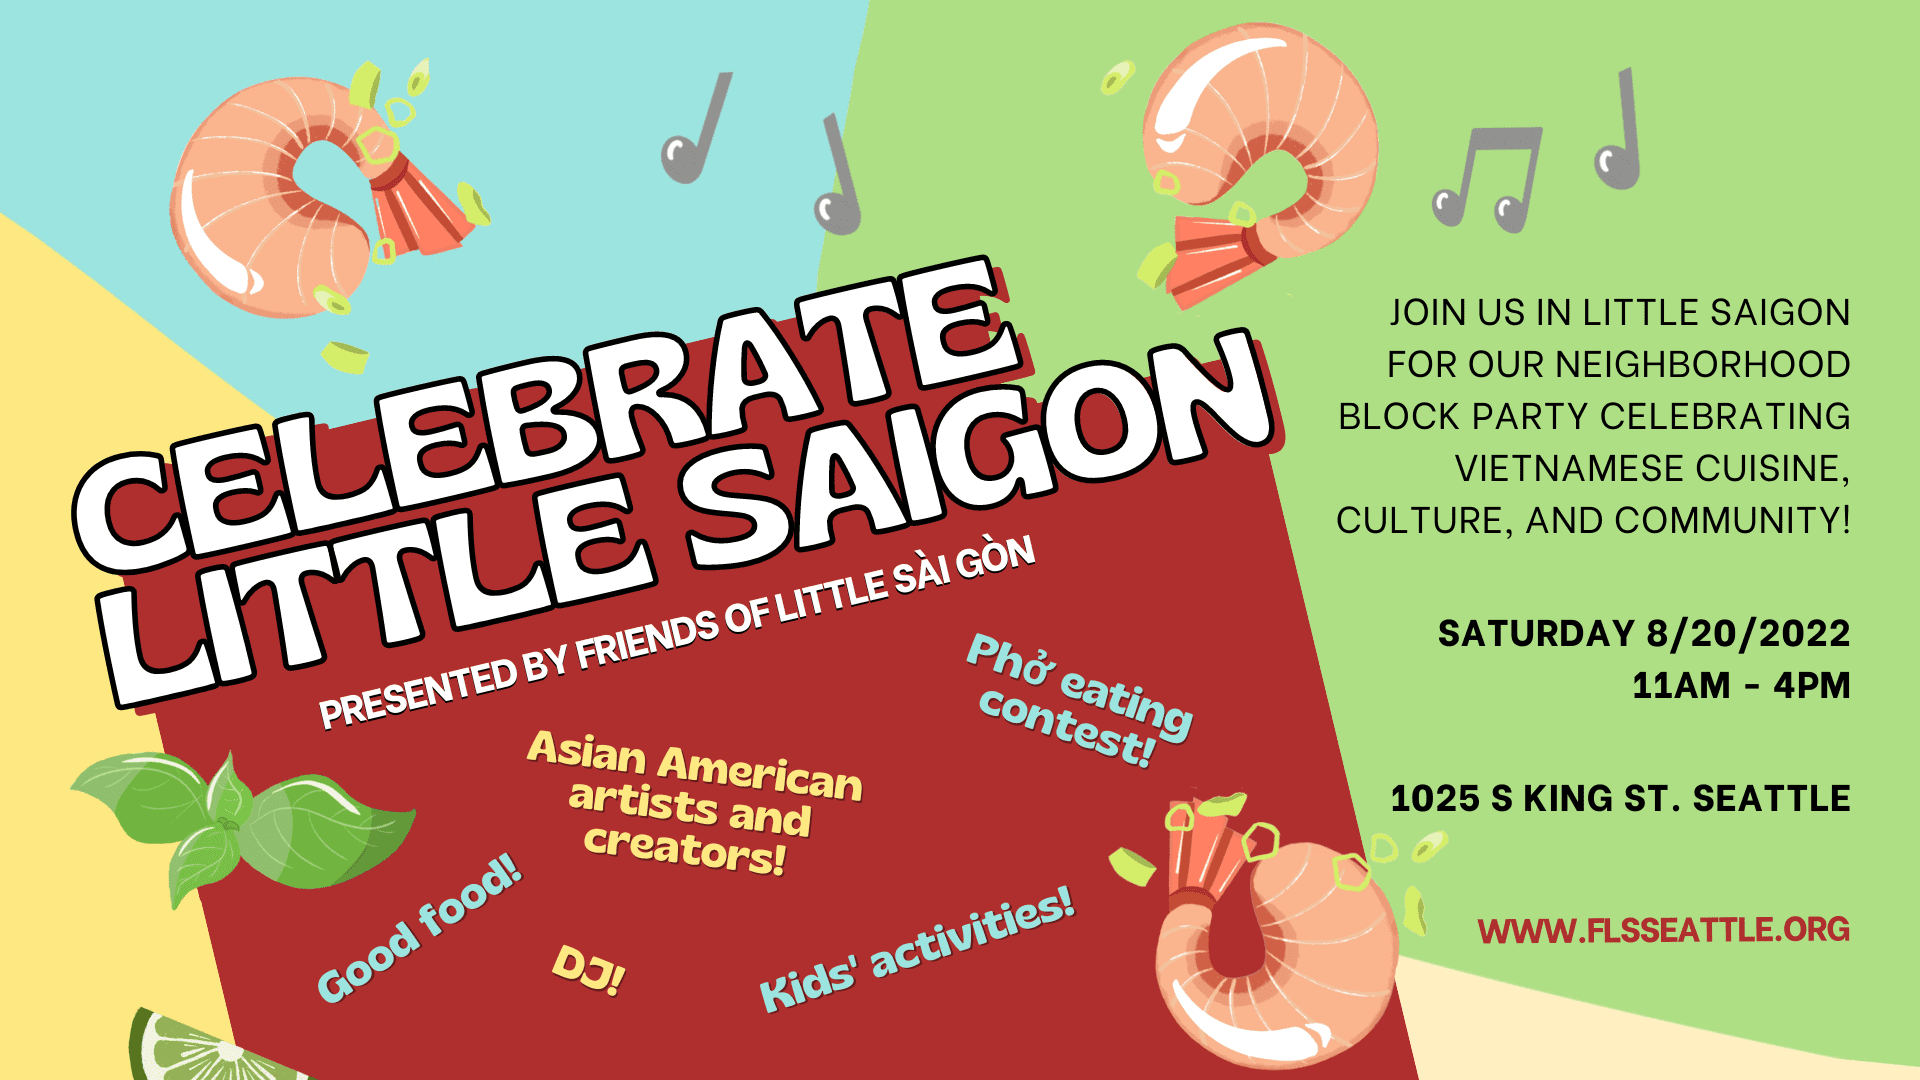 A poster highlighting Celebrate Little Saigon.